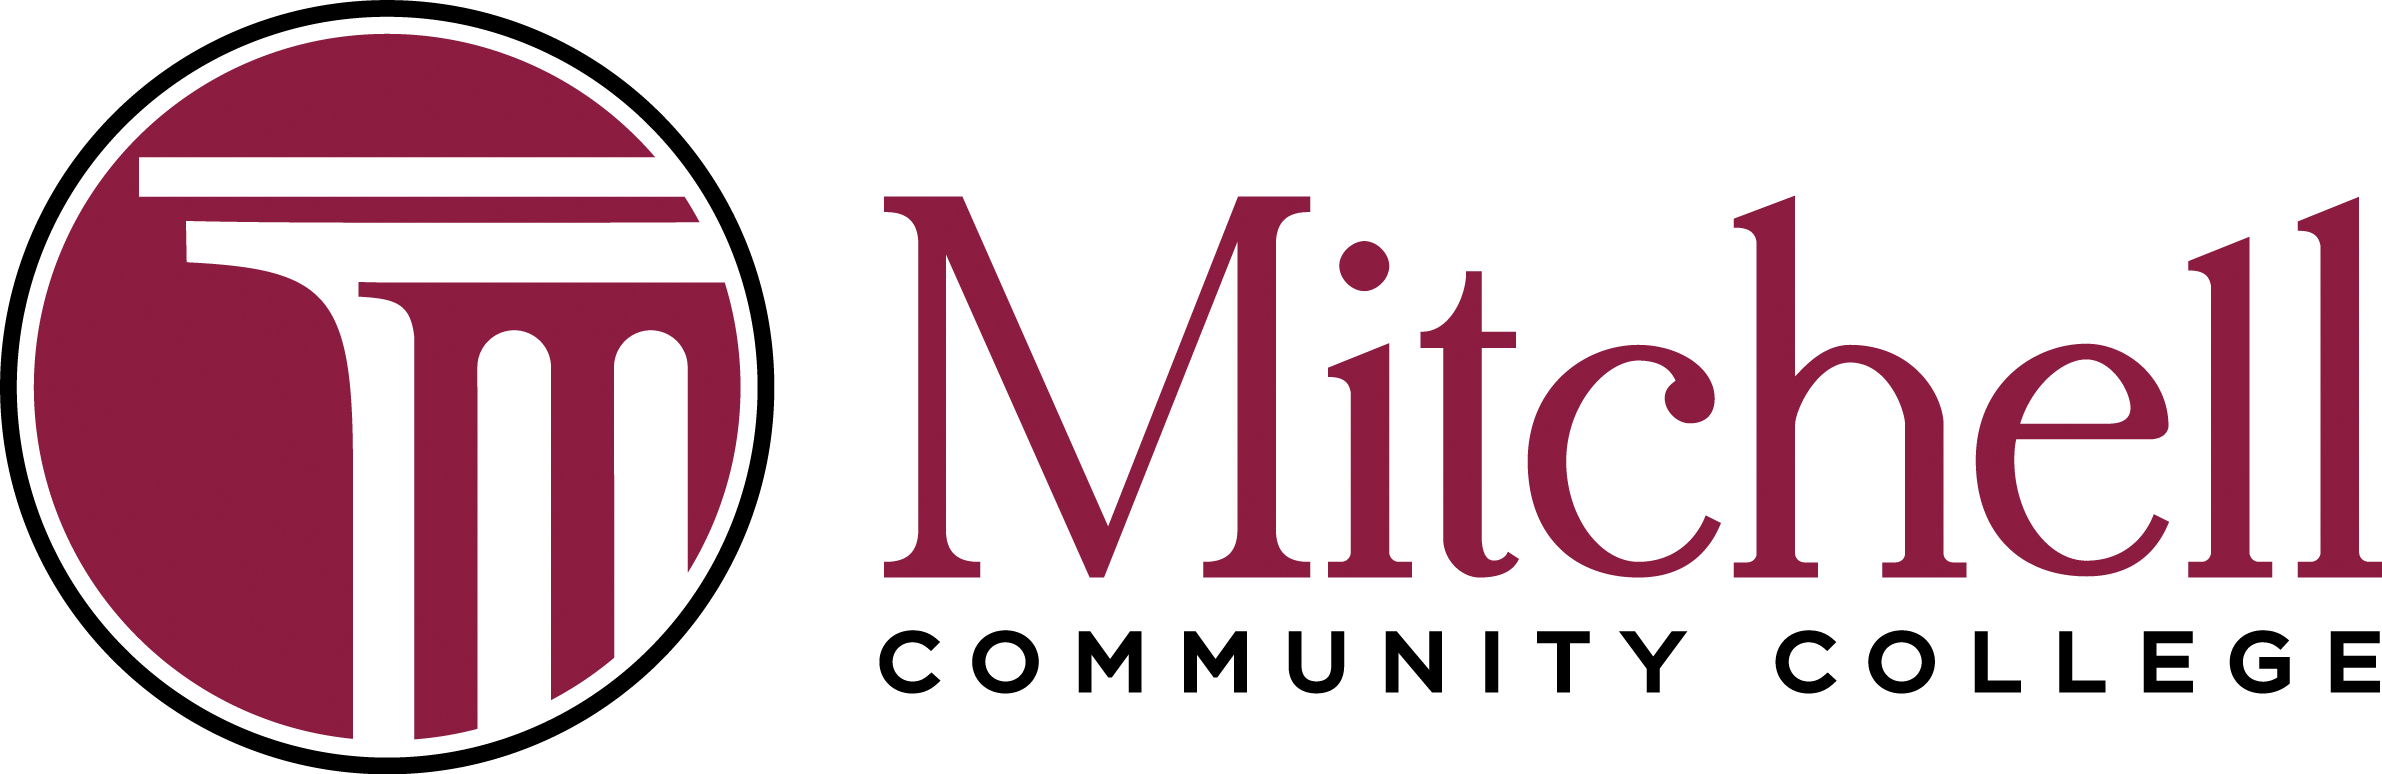 Horizontales burgunderrotes Logo des Mitchell Community College.